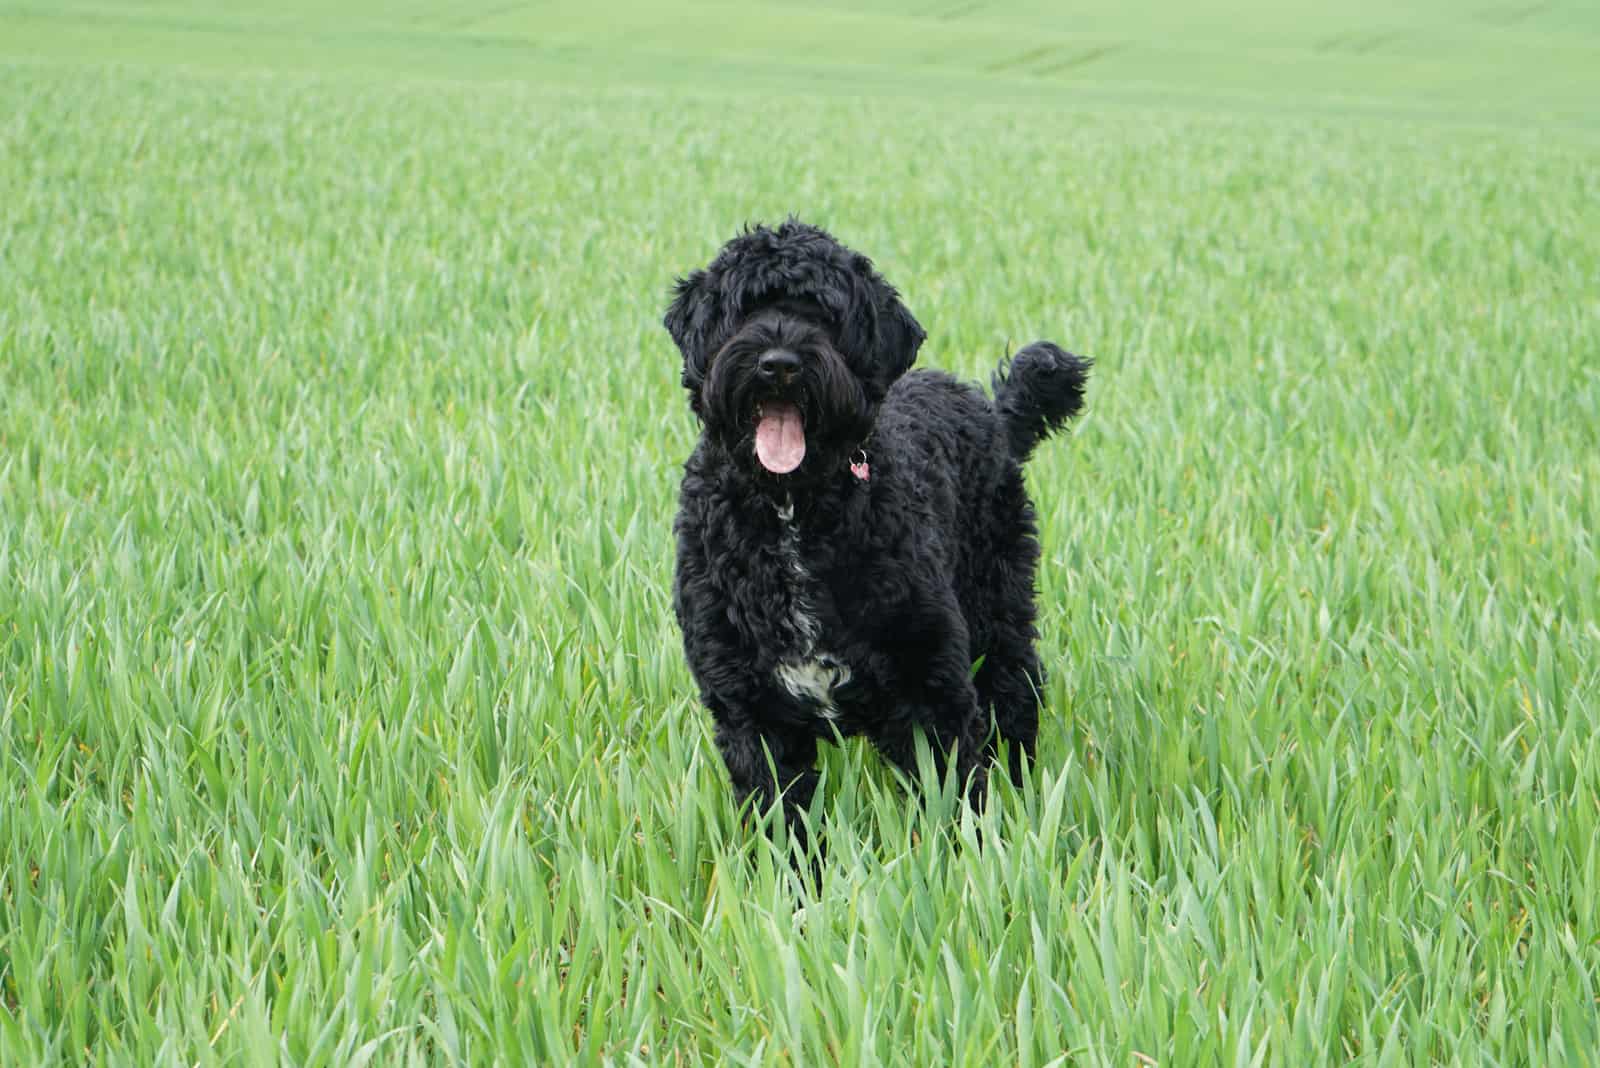 Portuguese water dog in a field